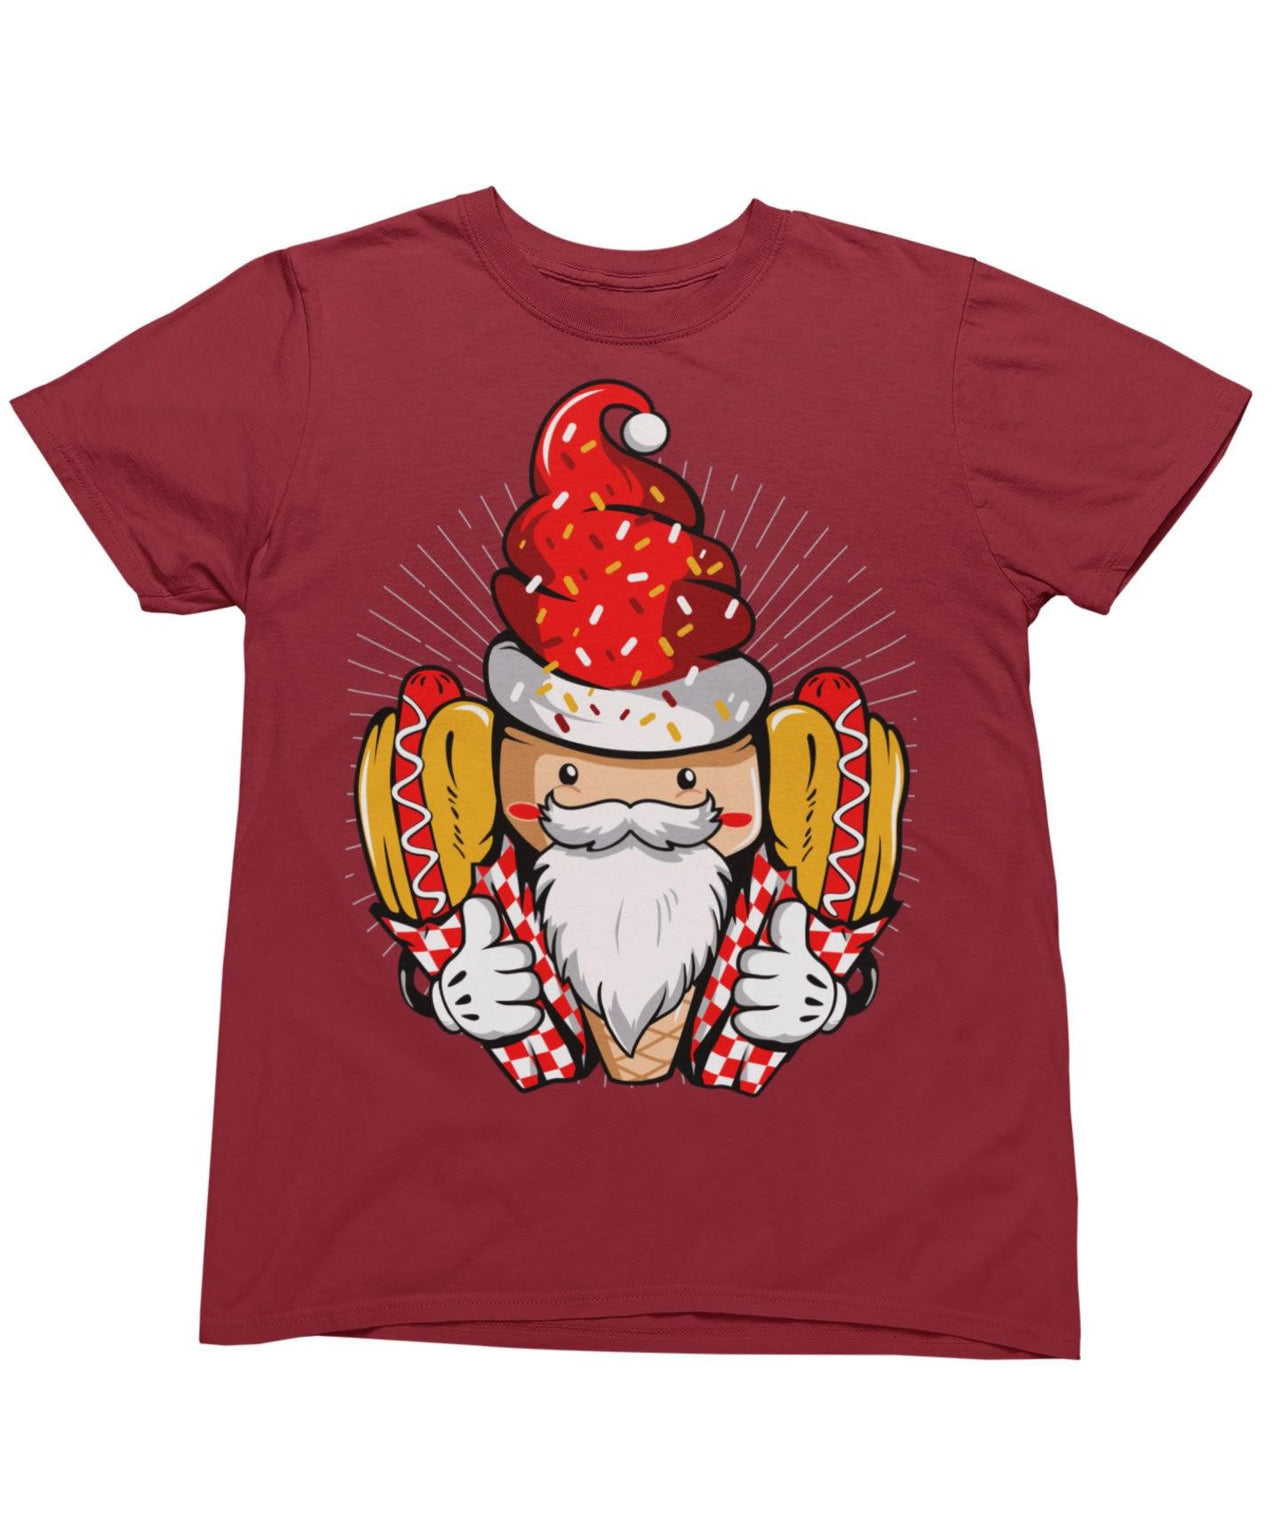 Hotdog Santa Unisex Christmas Unisex T-Shirt 8Ball